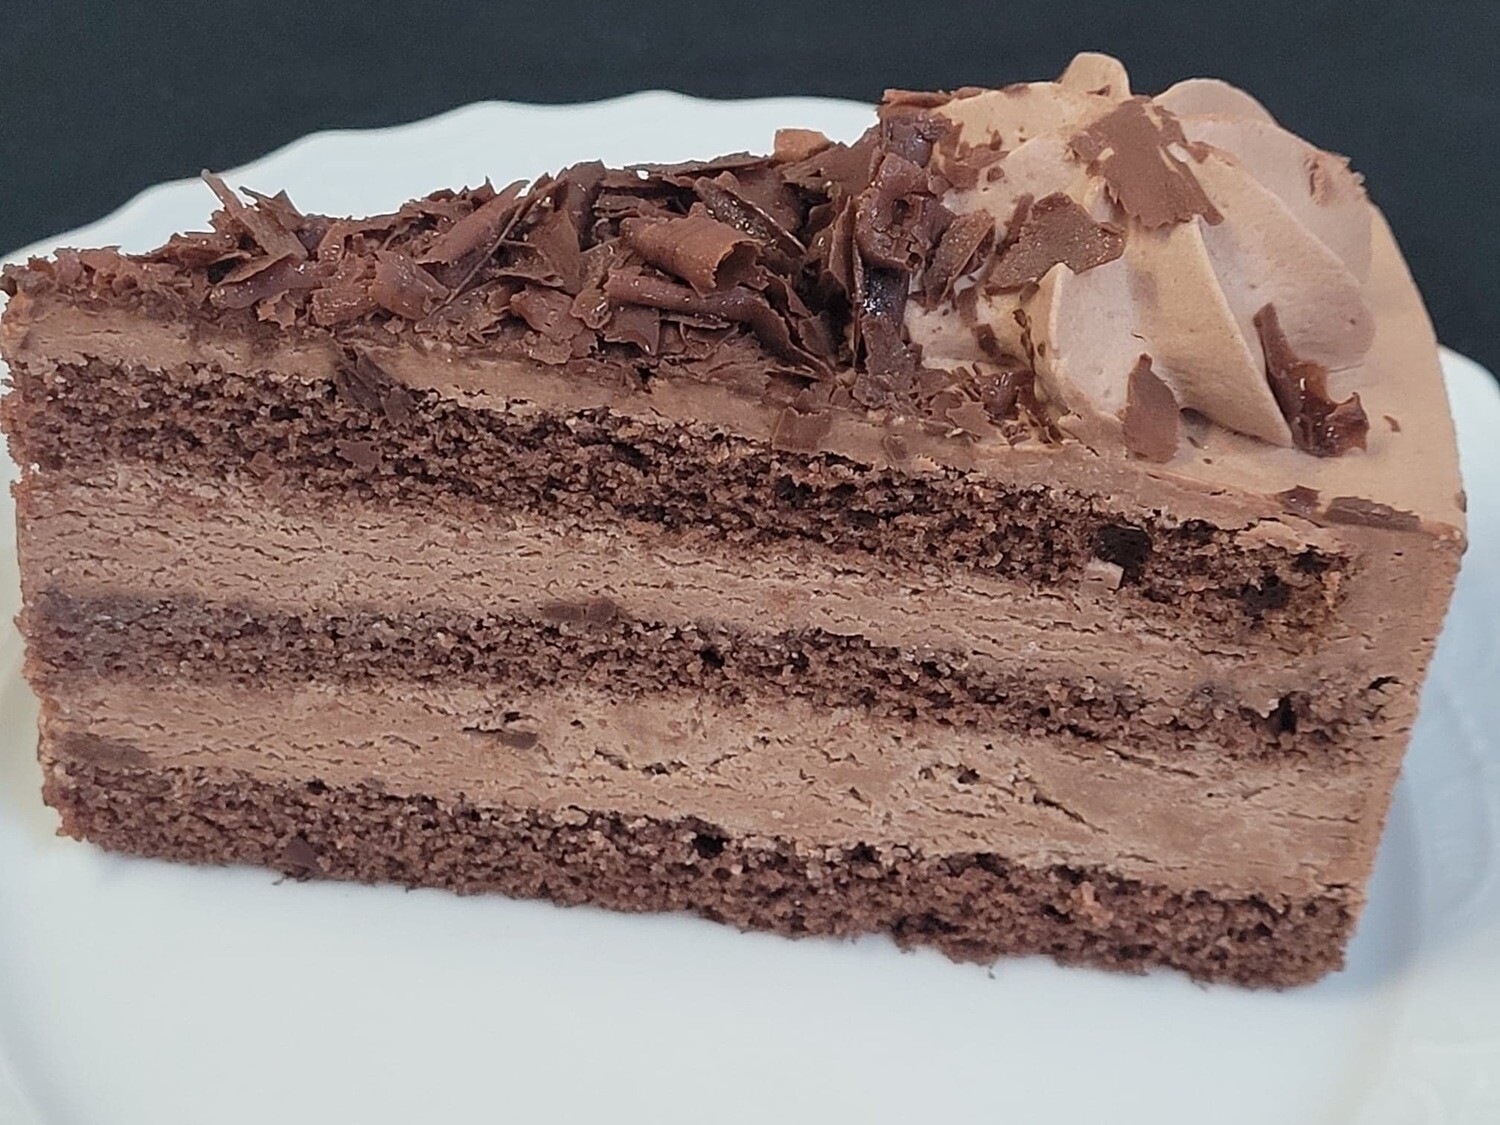 16. Chocolate Mousse Torte